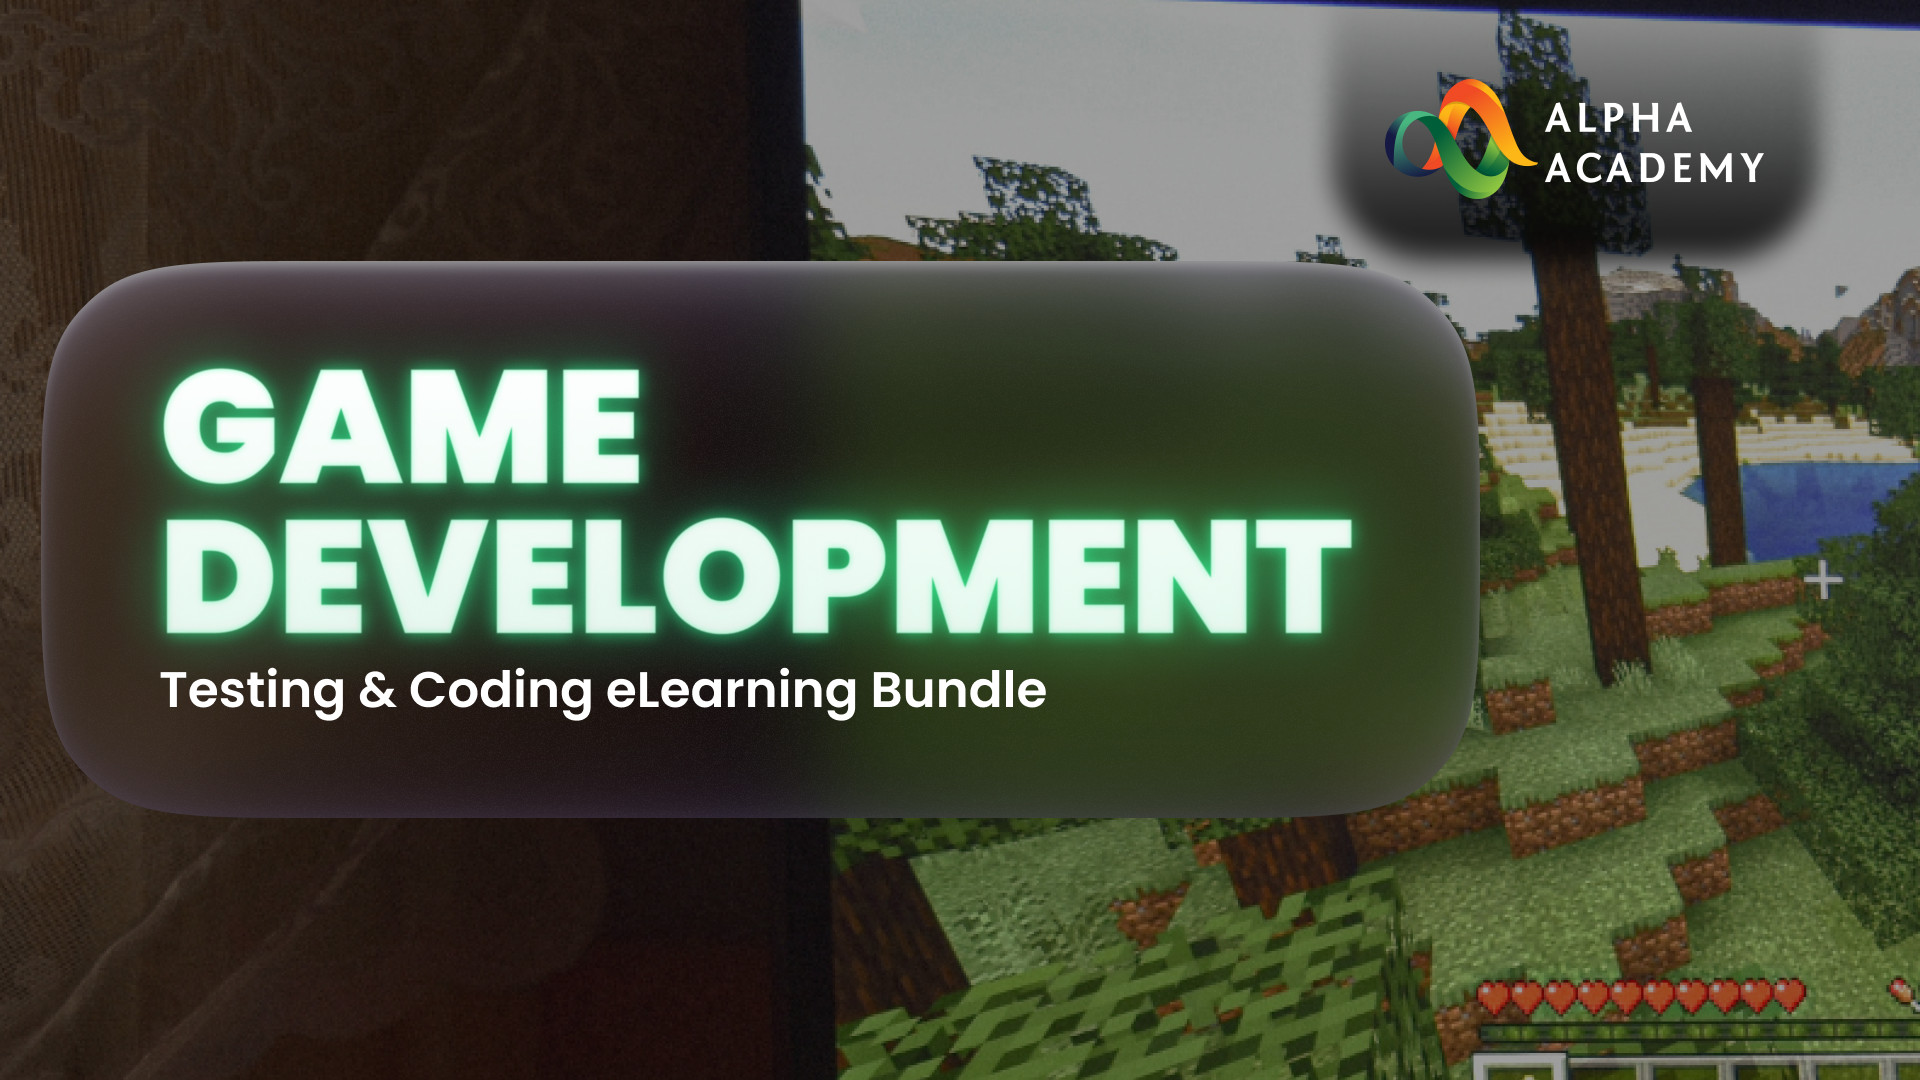 Game Development, Testing & Coding eLearning Bundle Alpha Academy Code USD 10.19